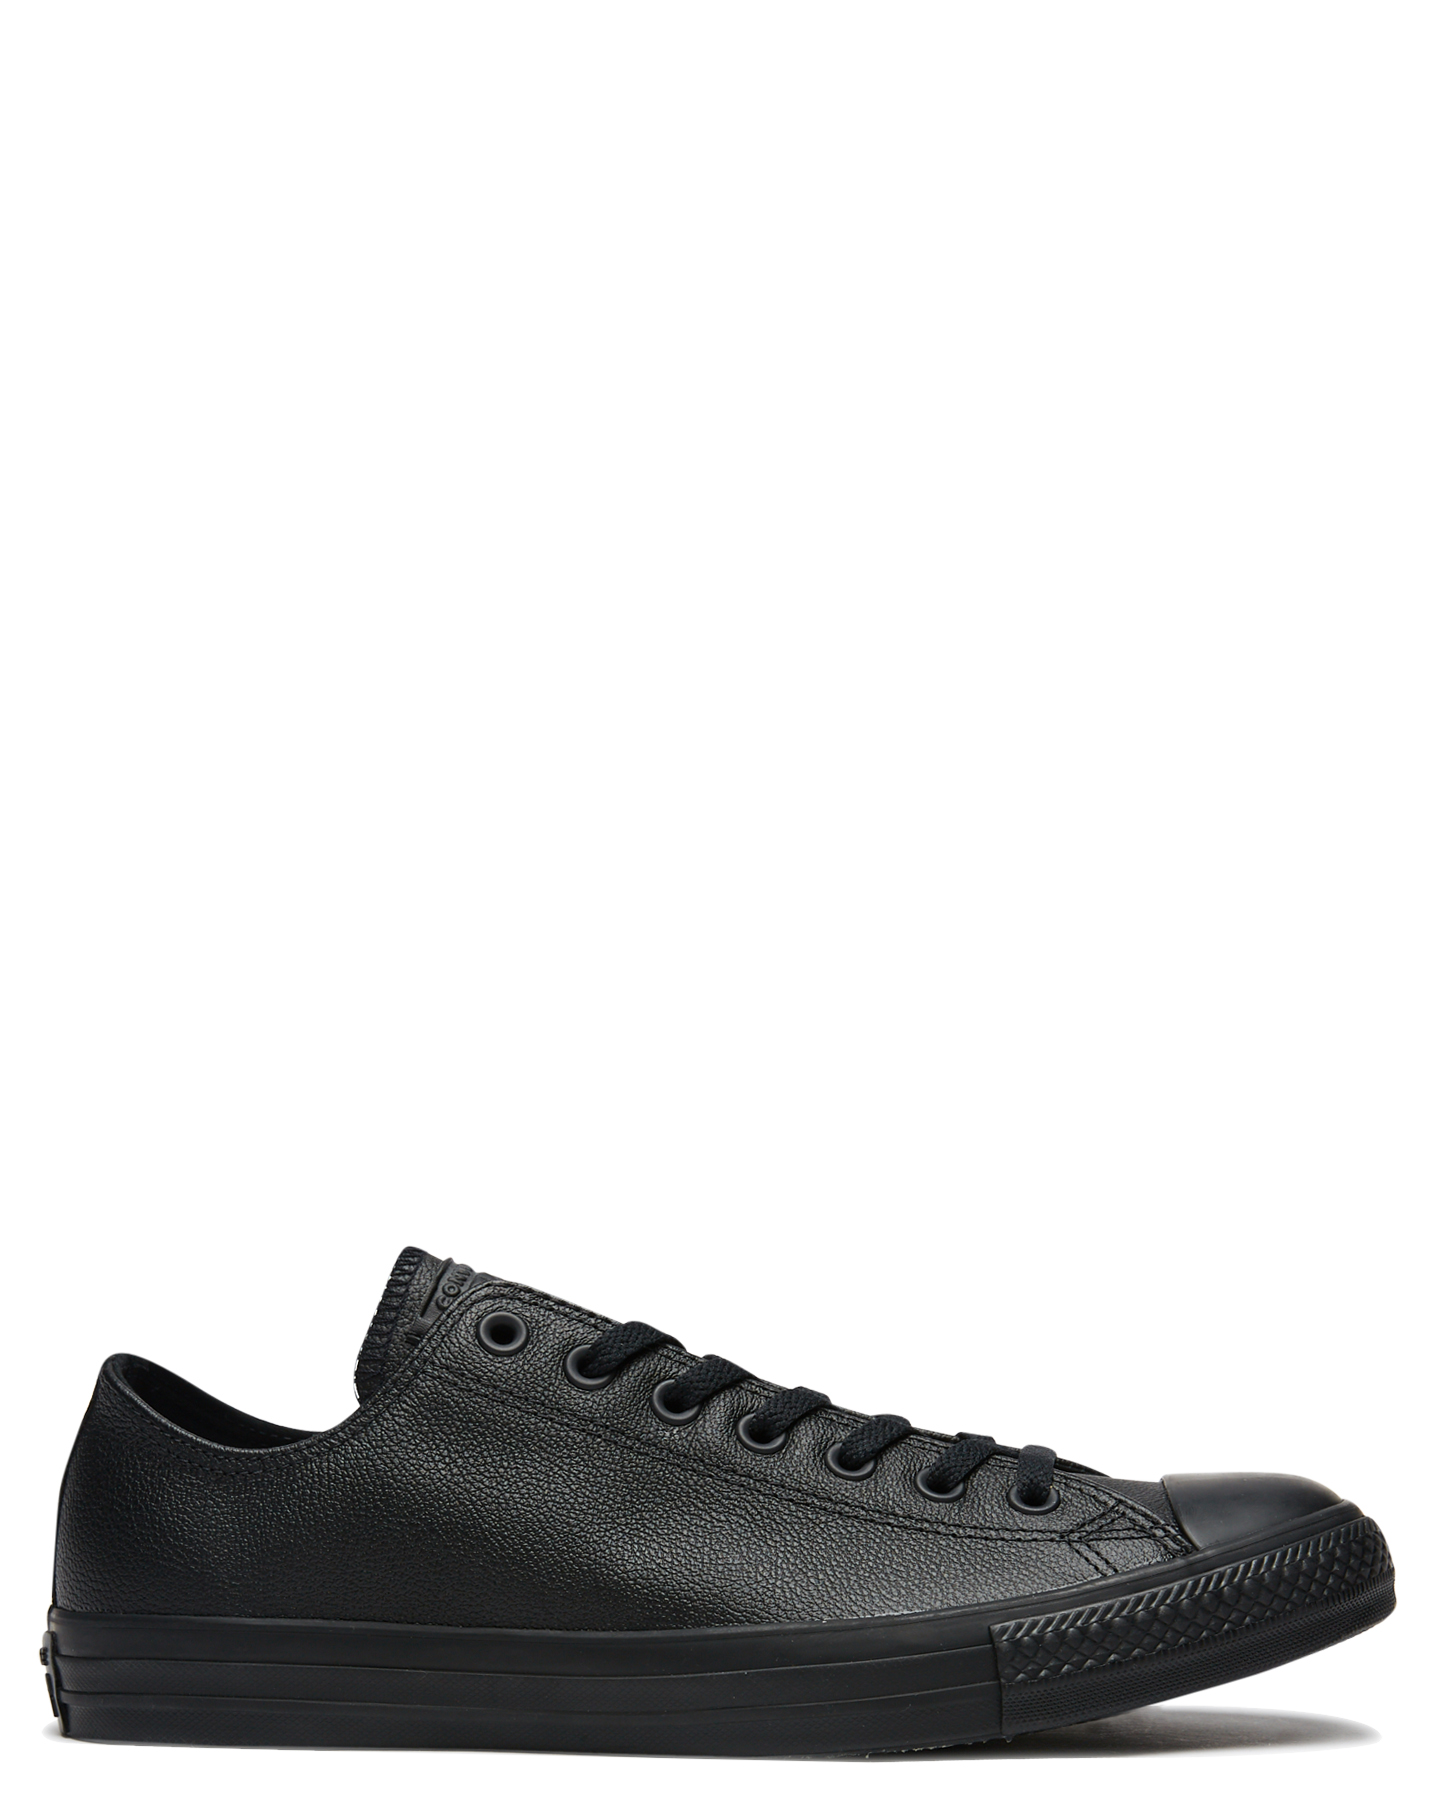 ladies black leather converse shoes